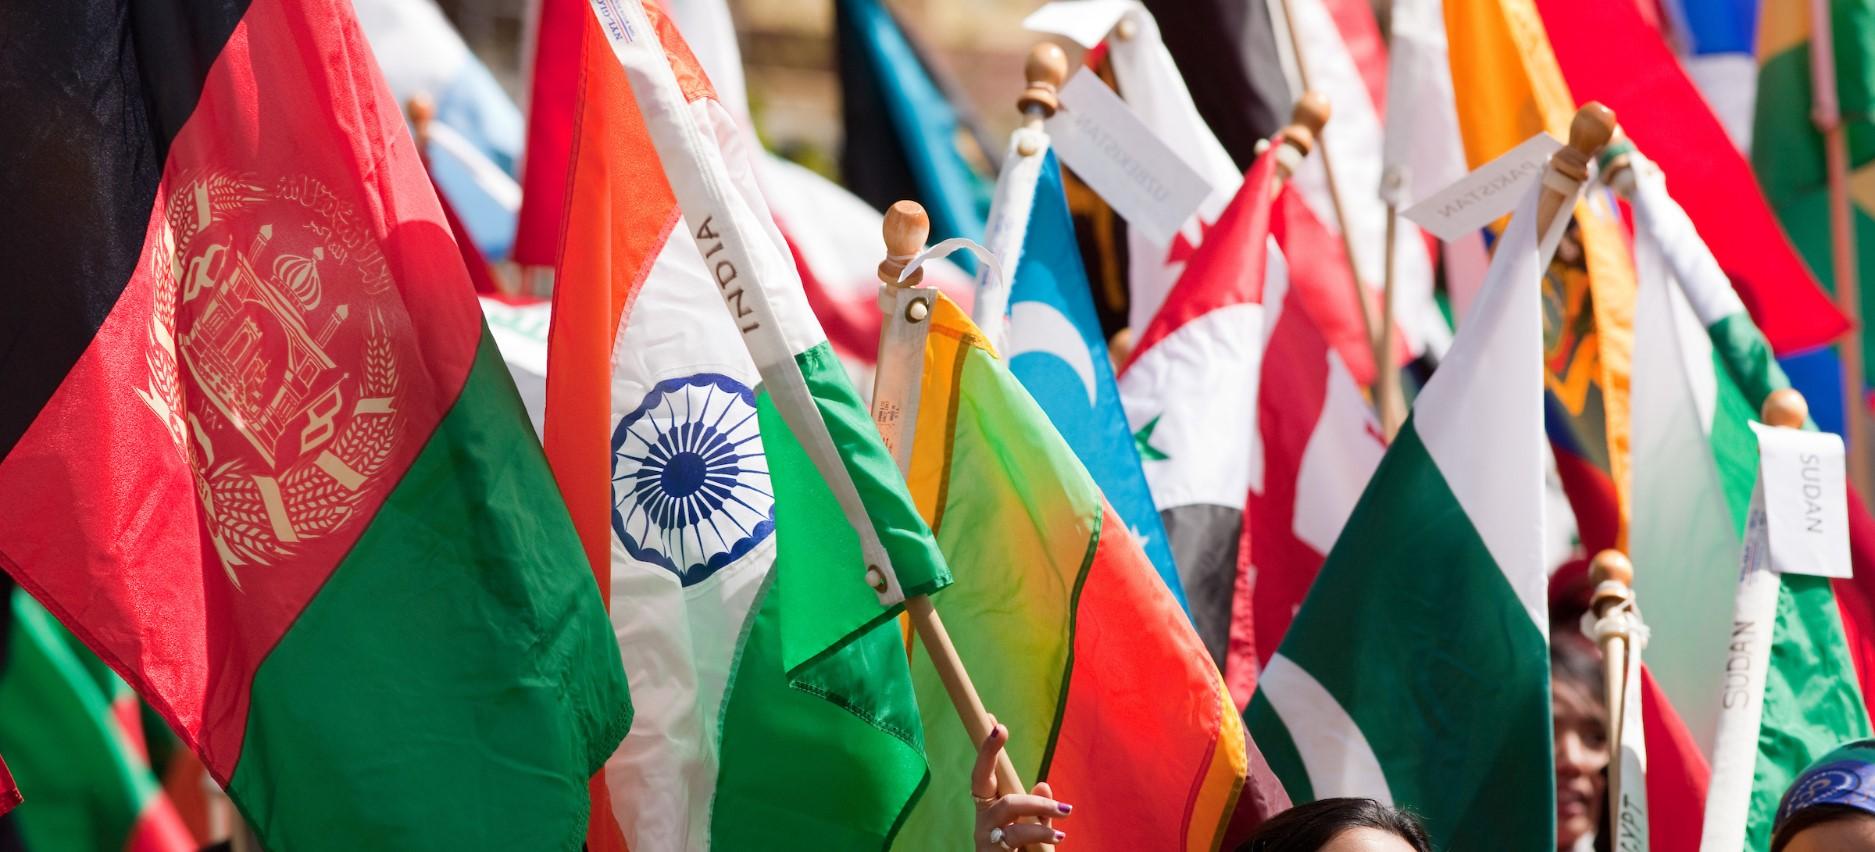 India flag at street fair 